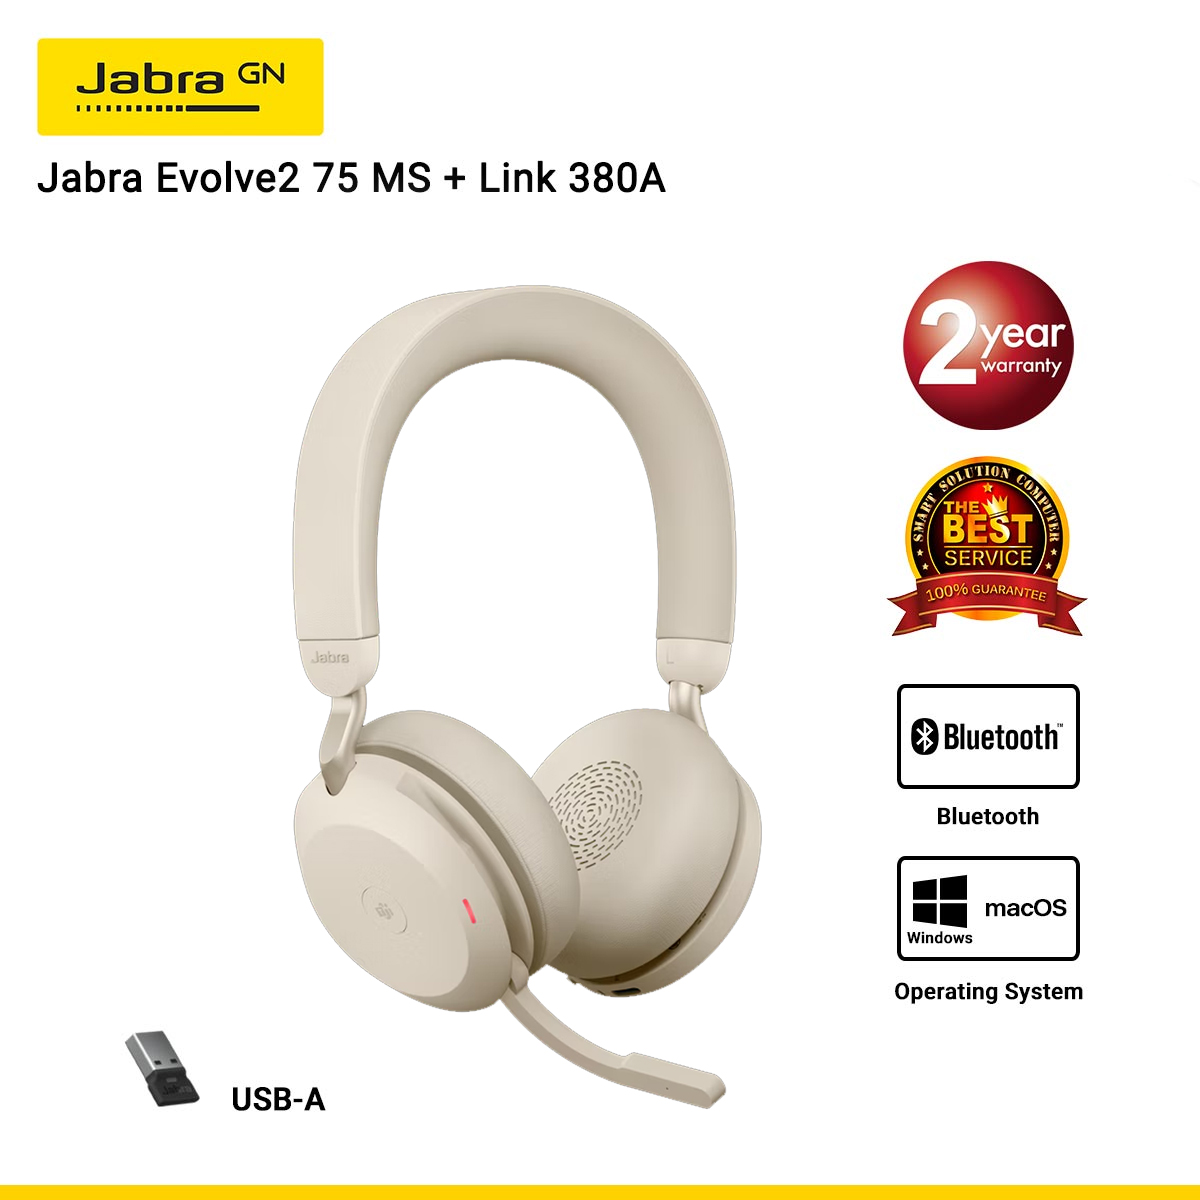 Jabra Evolve2 75 MS + Link 380A Stereo